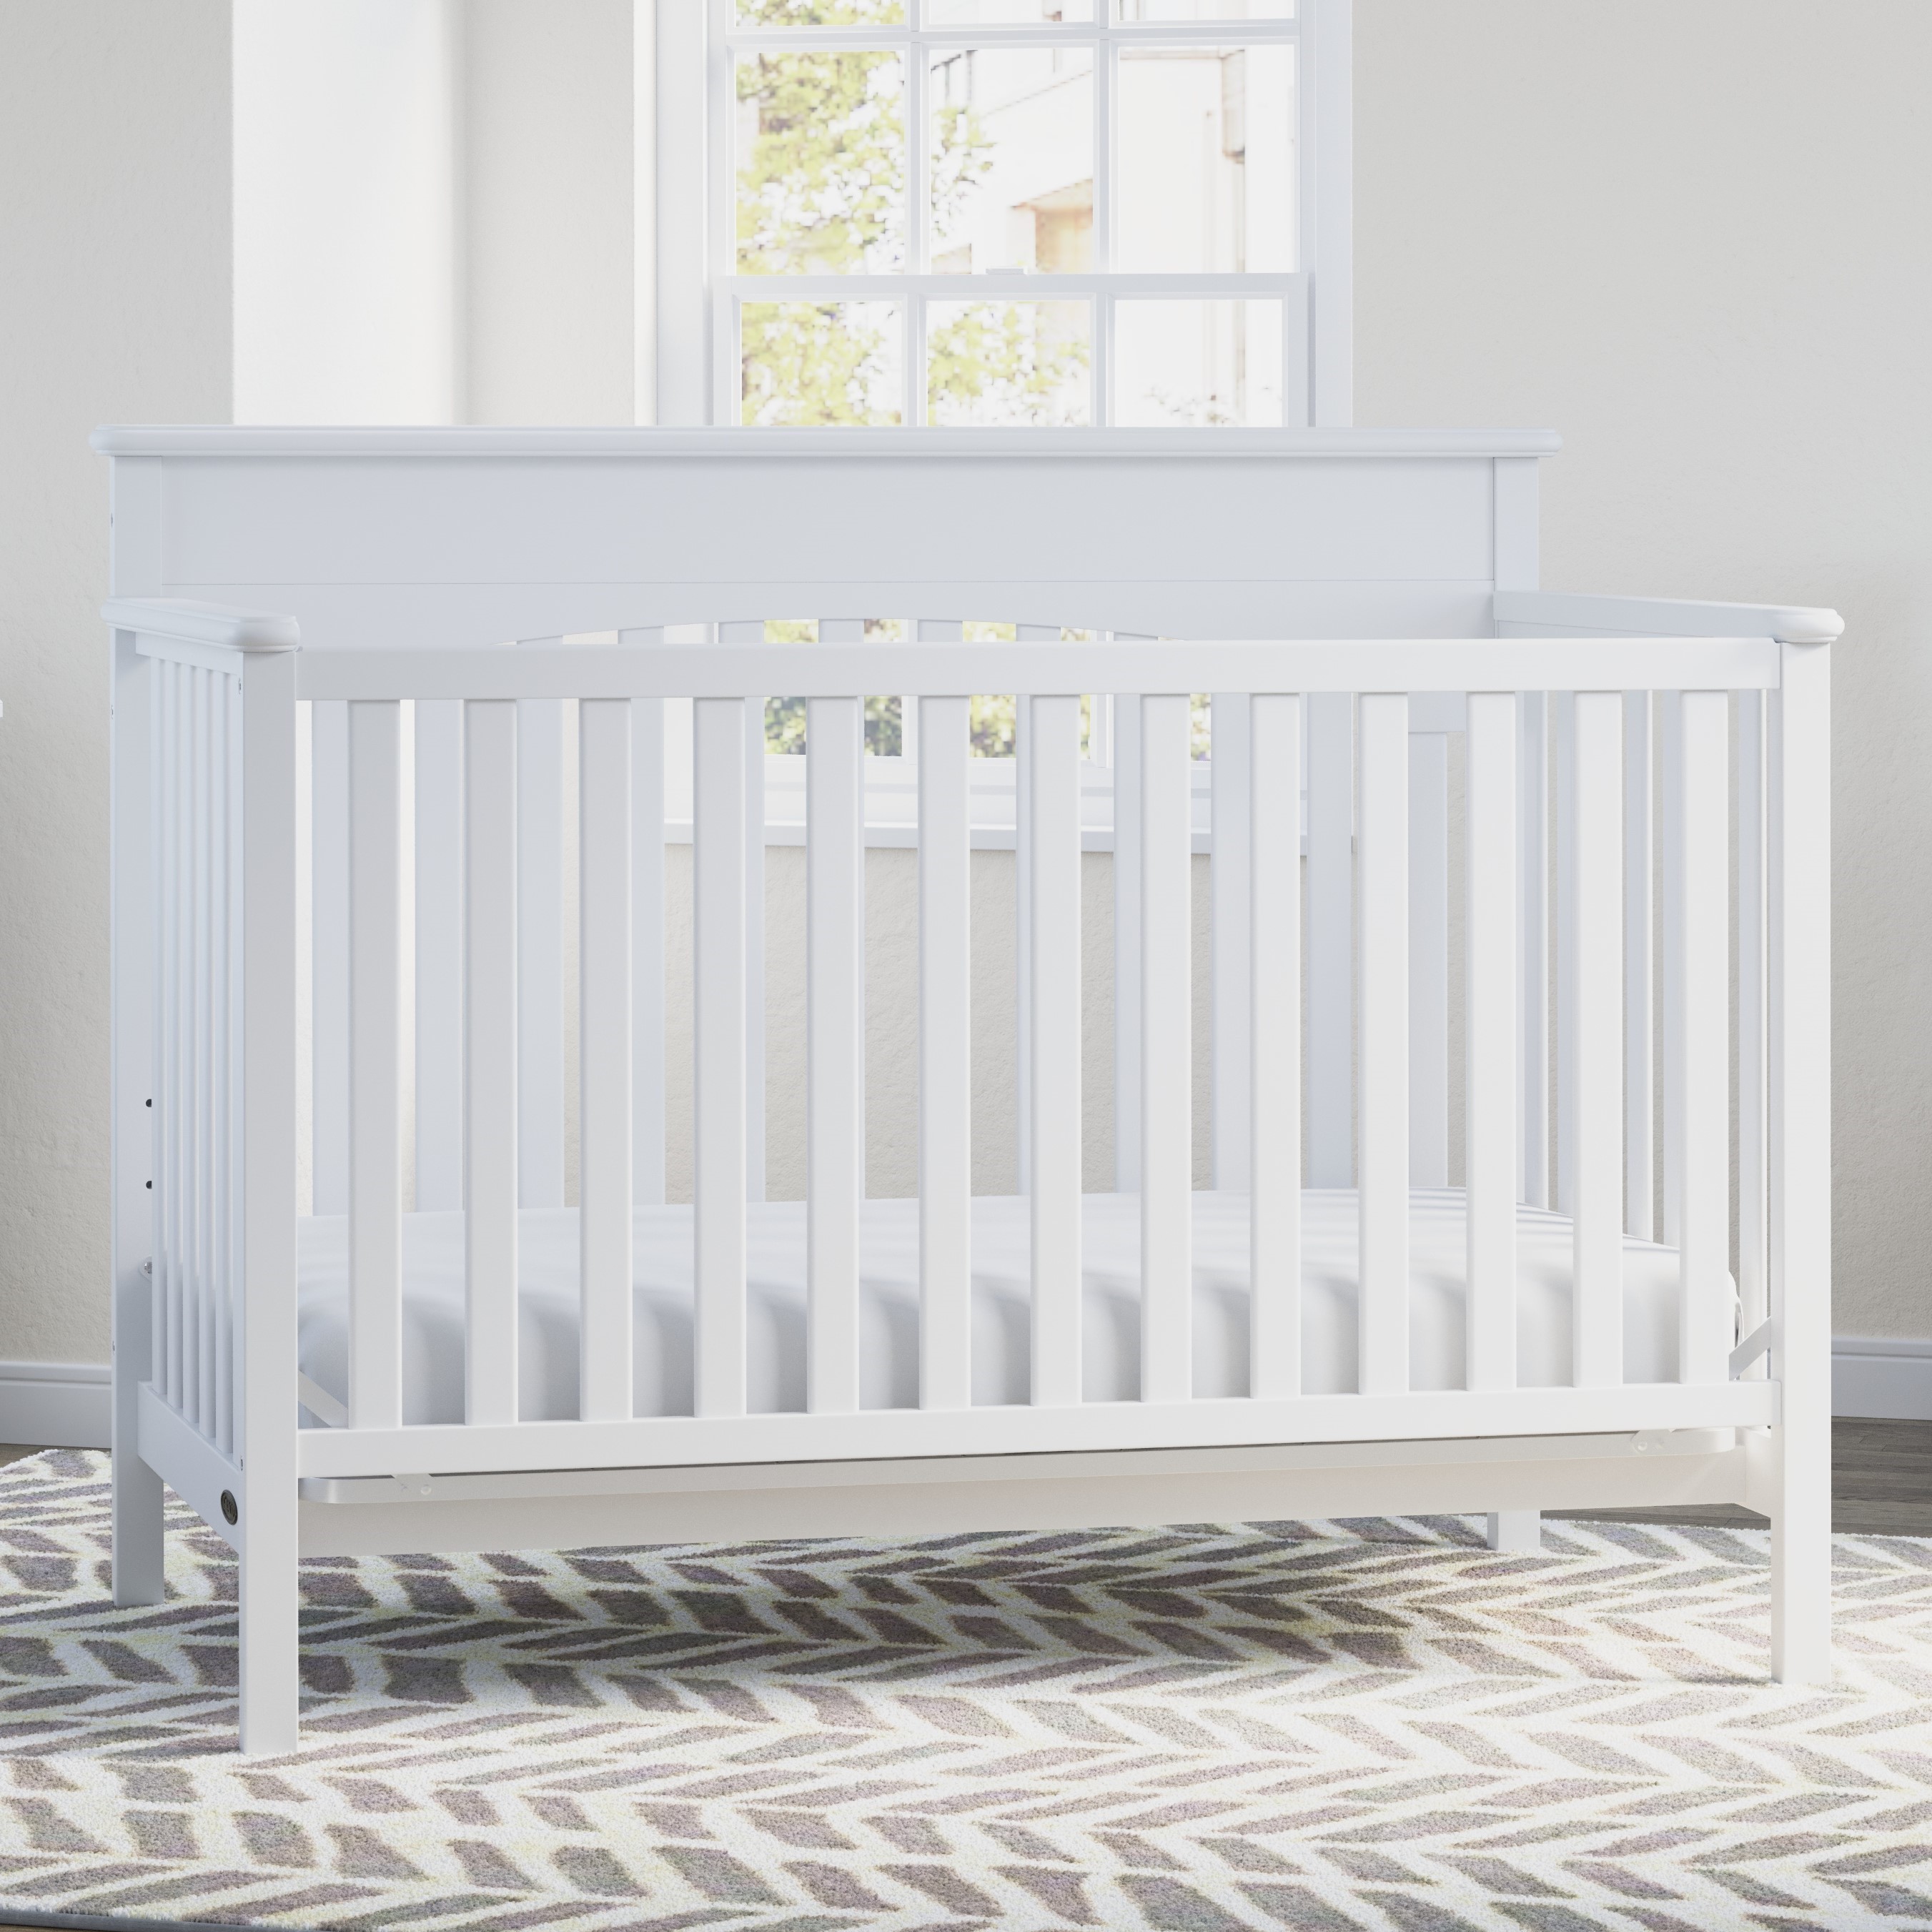 Graco Lauren 5-in-1 Convertible Baby Crib, White - image 3 of 10